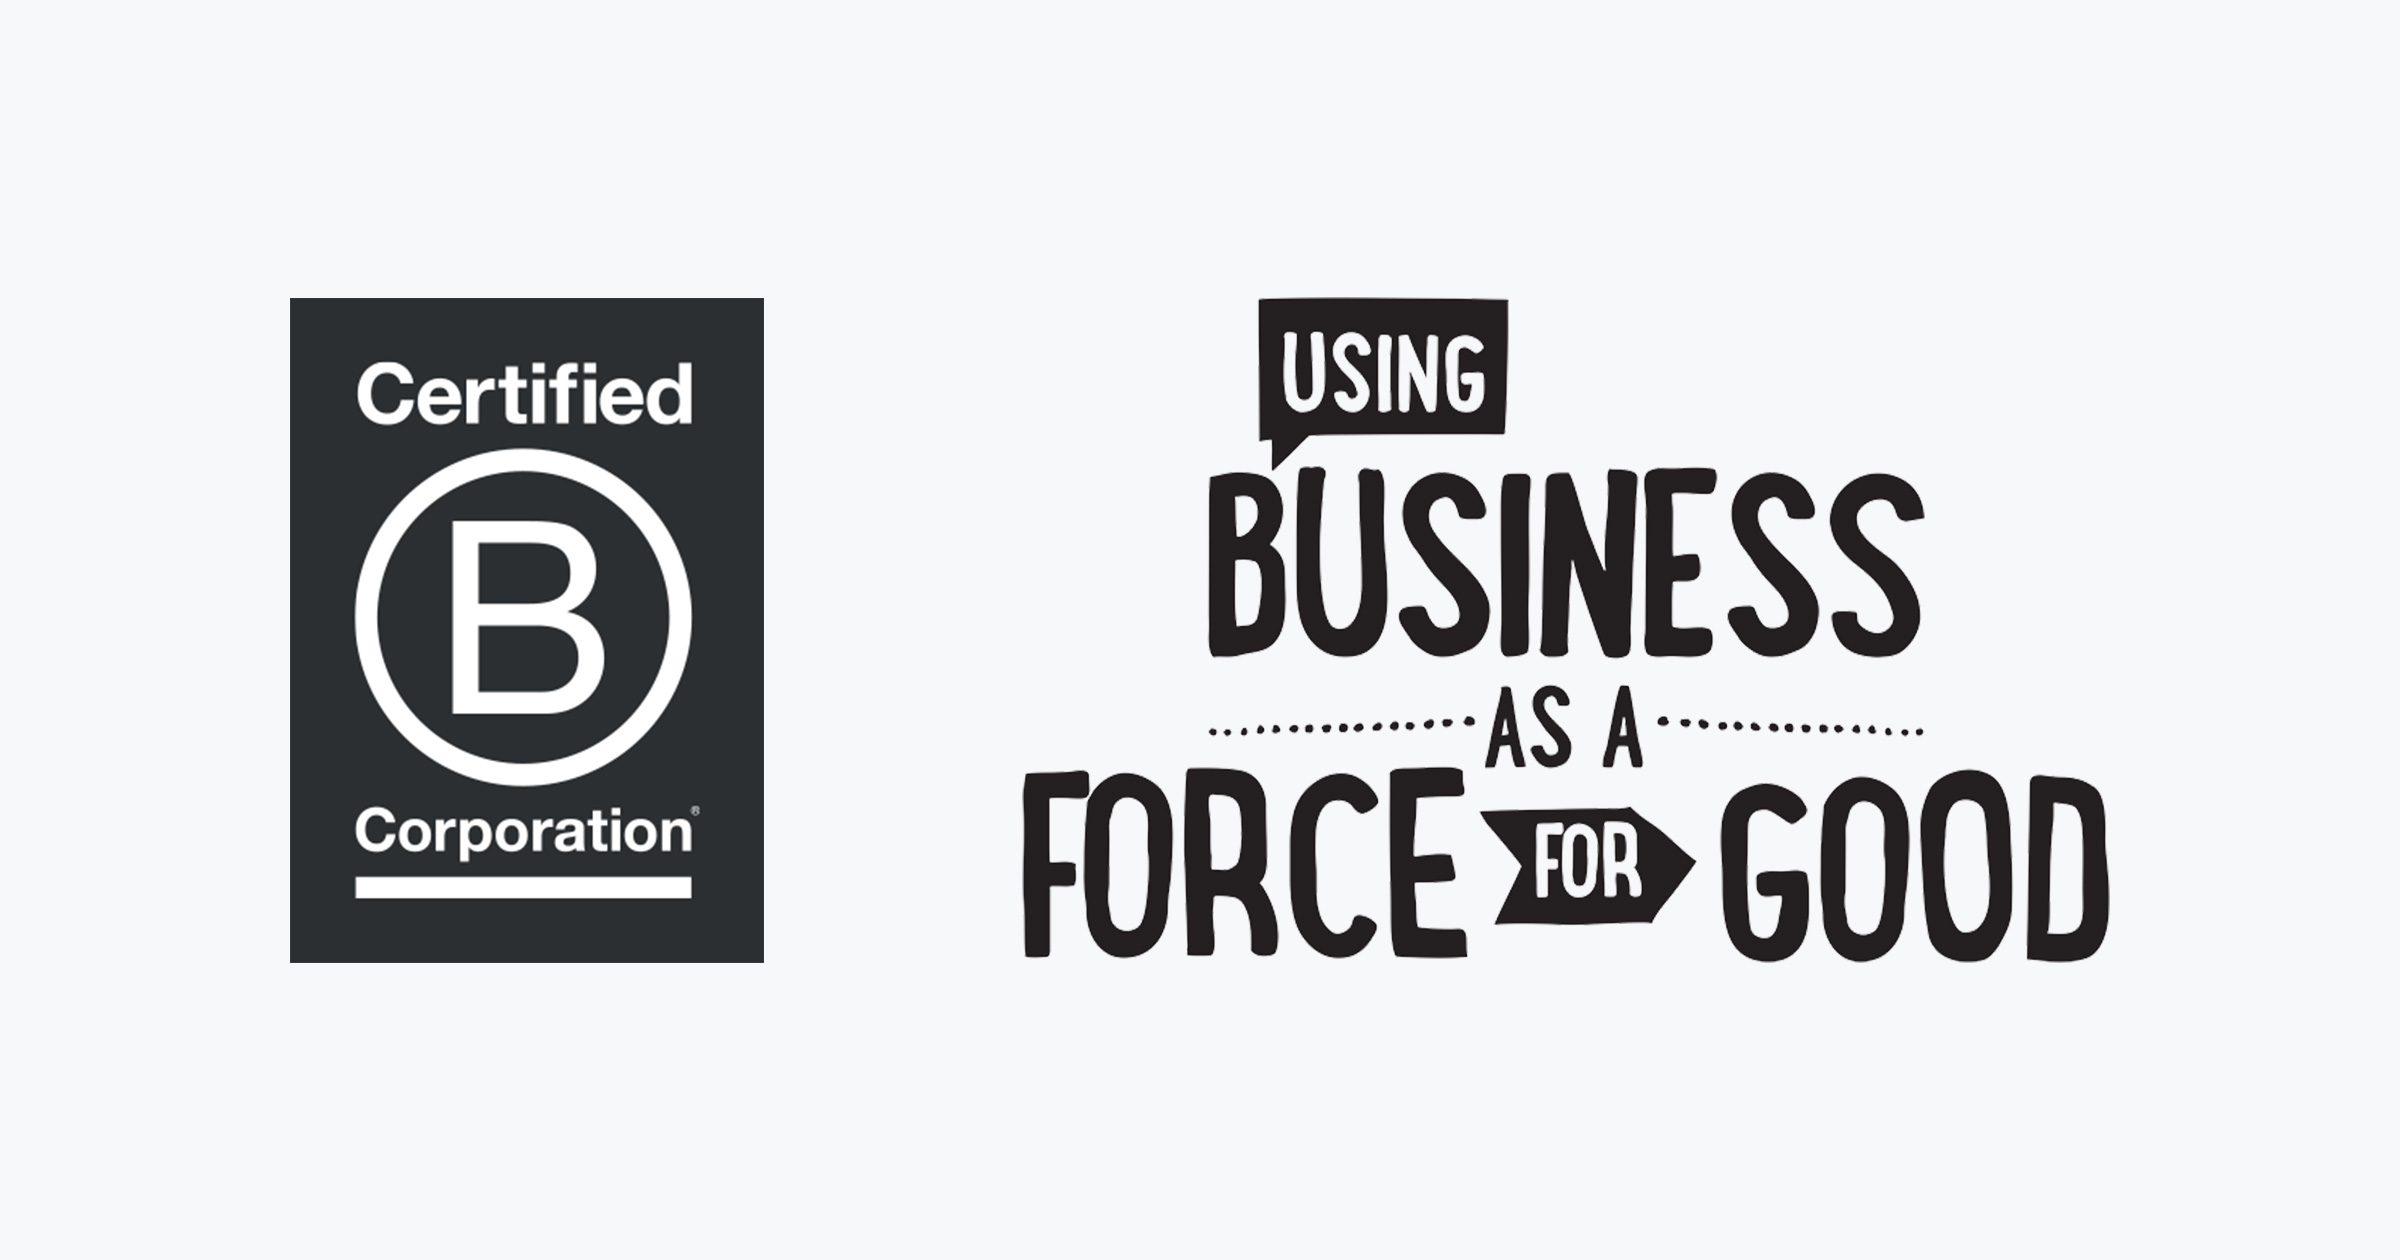 B Corp logos